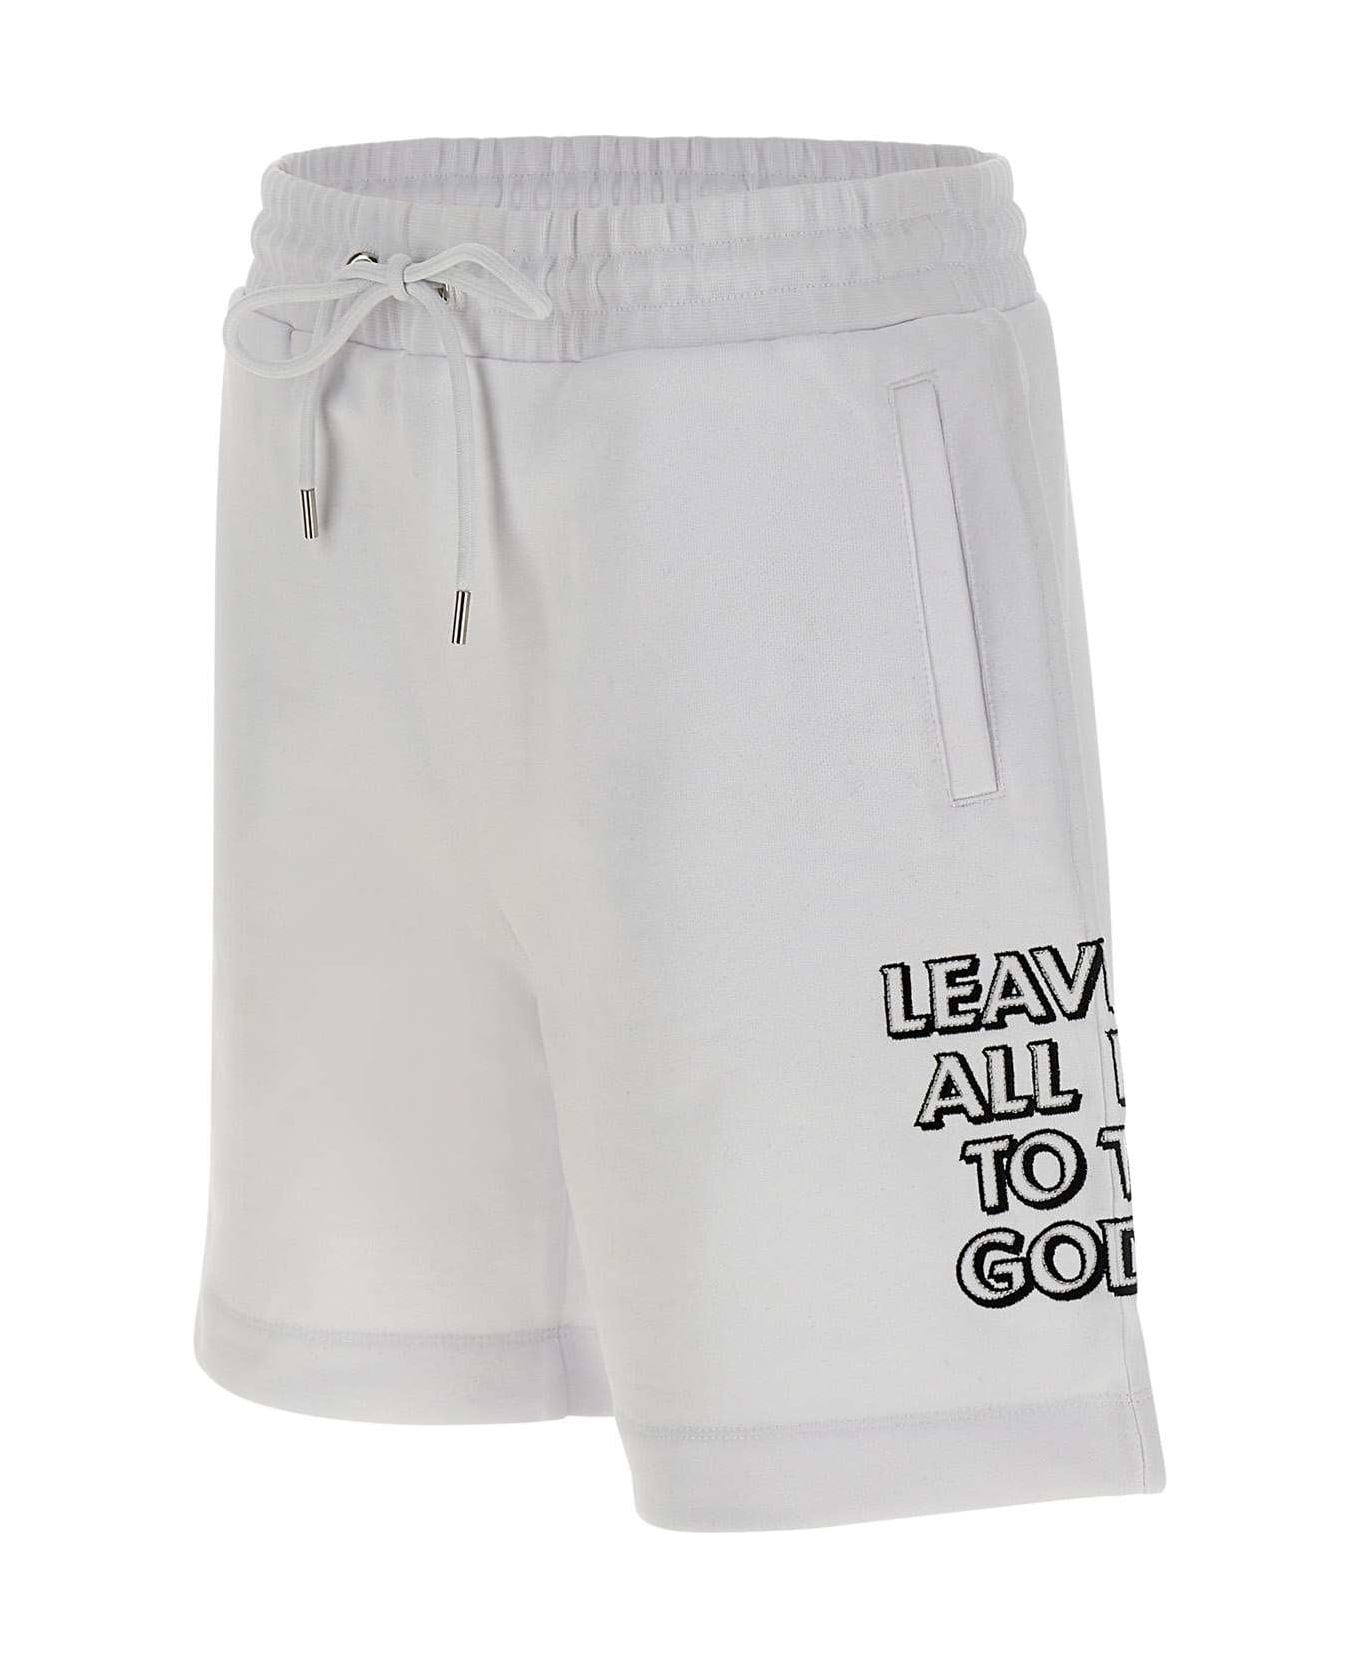 Iceberg Cotton Shorts - WHITE